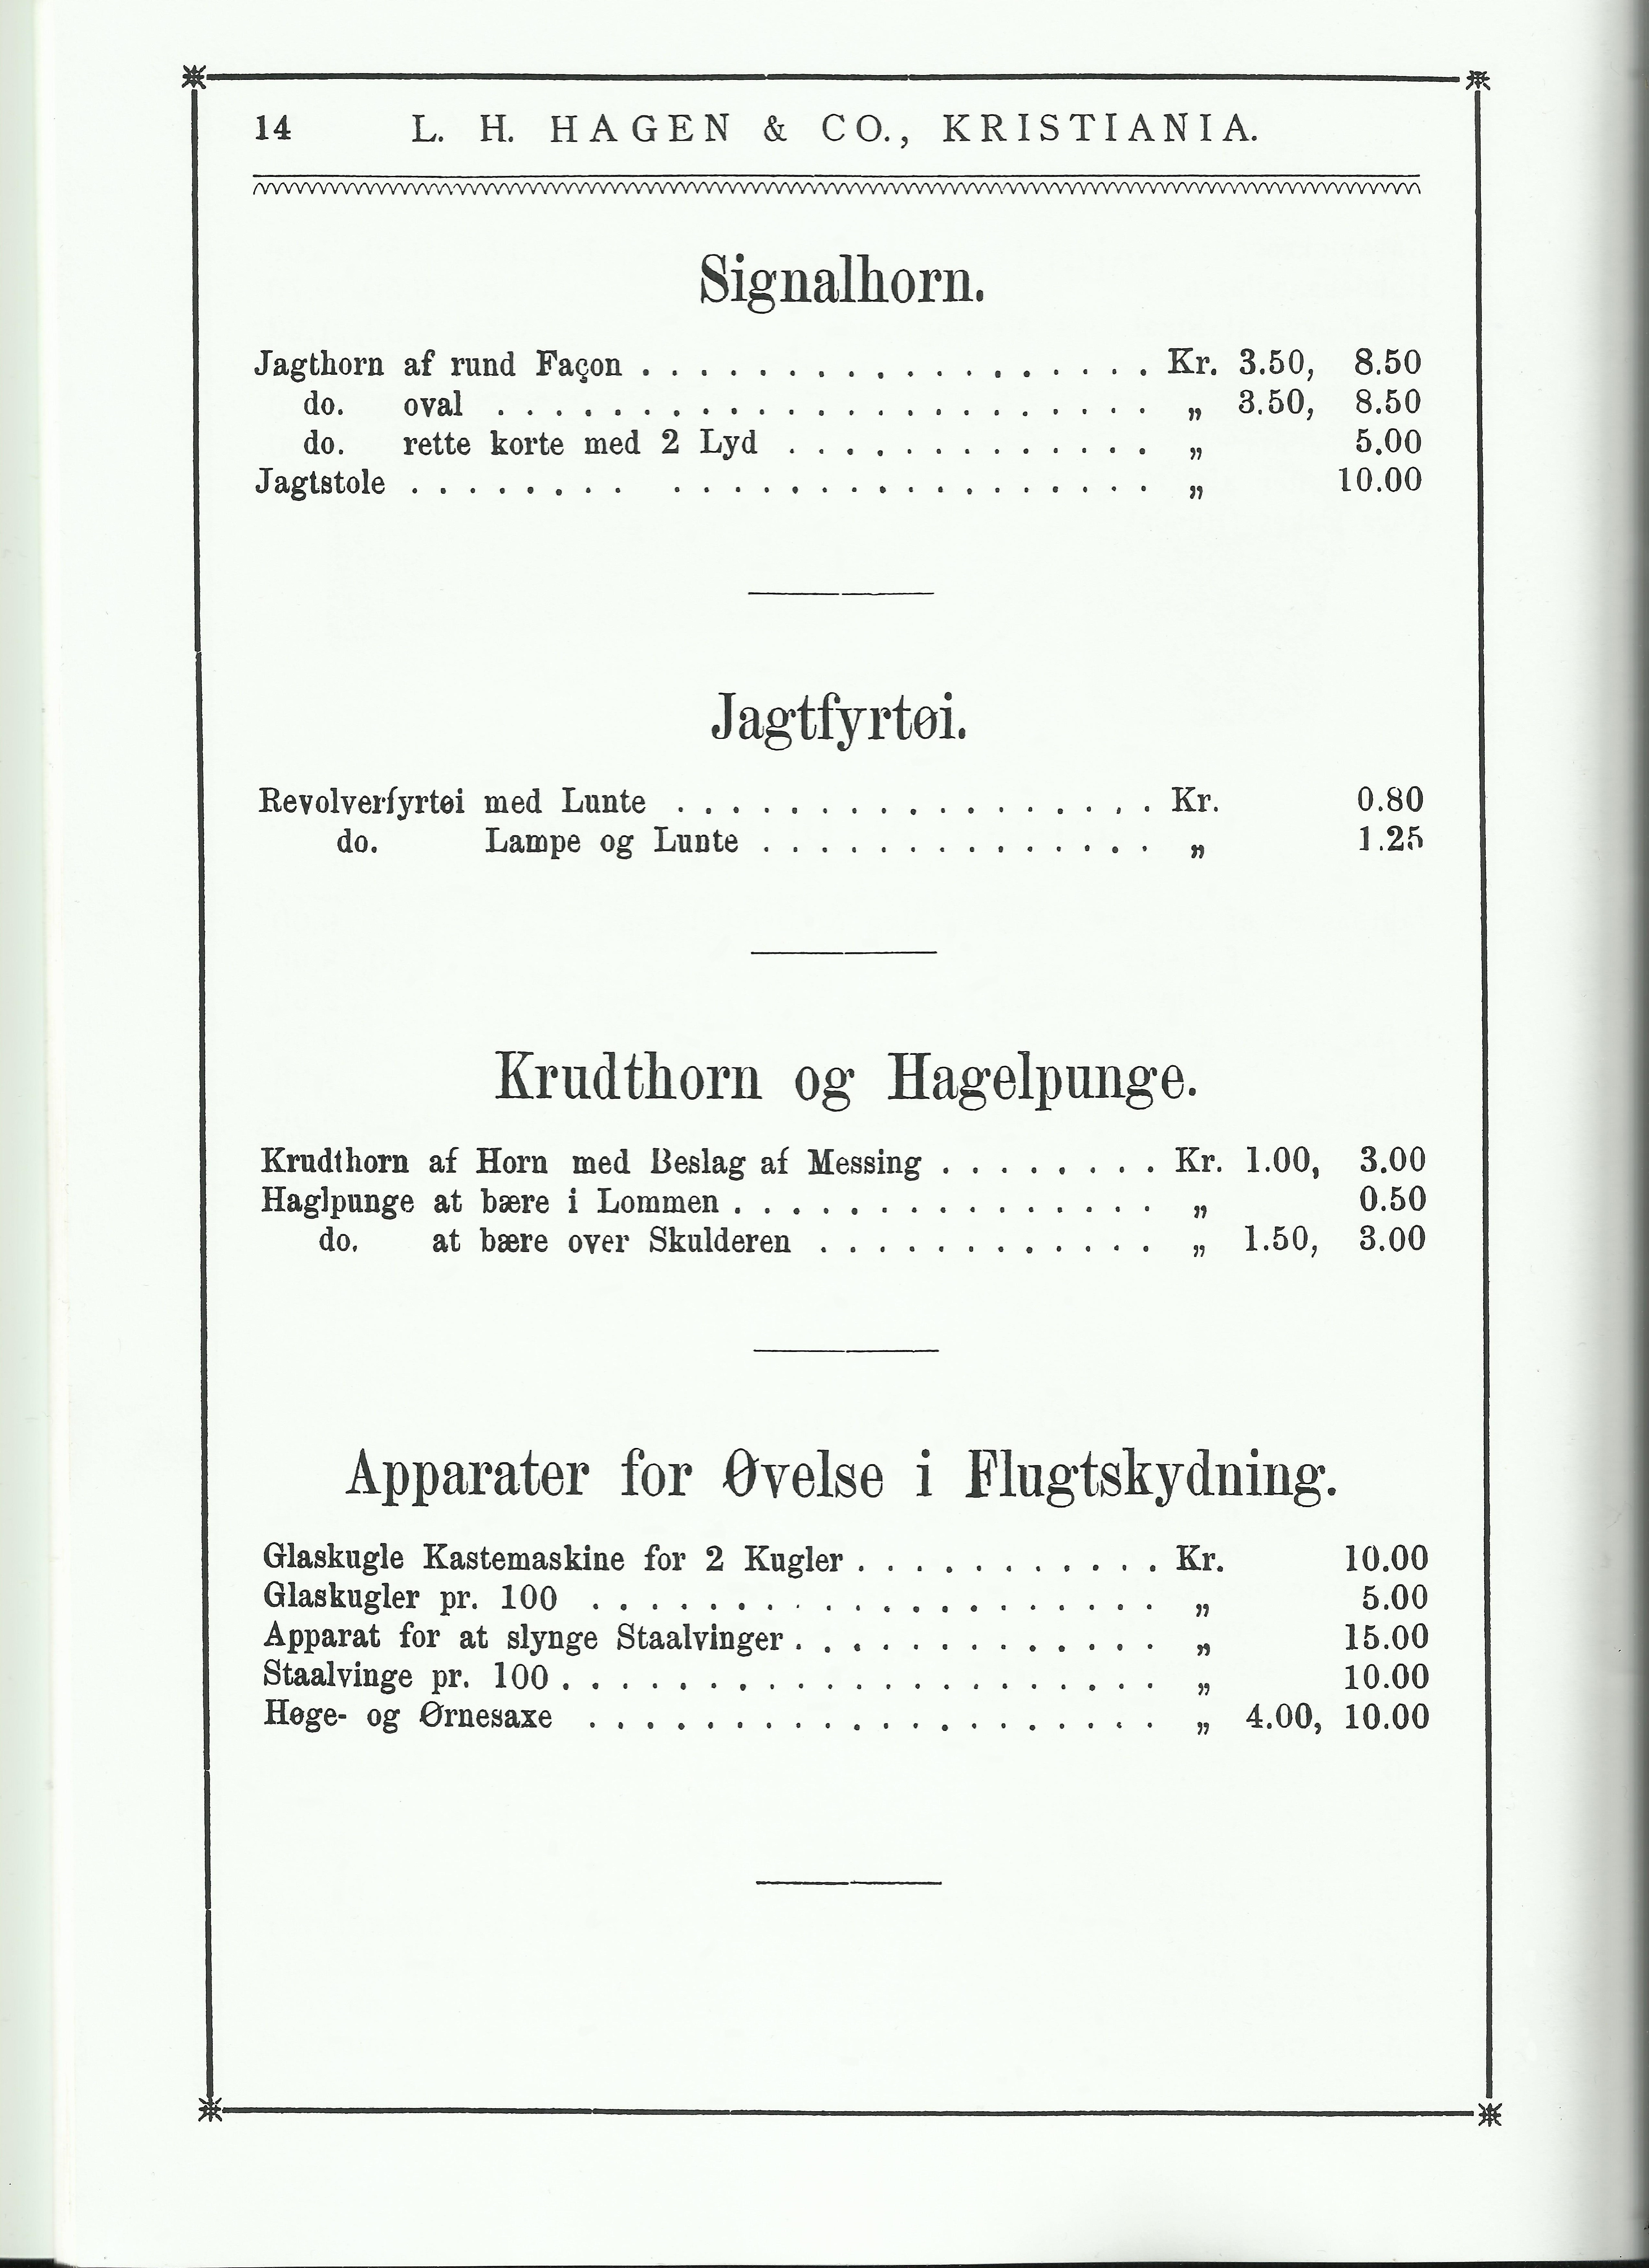 ./doc/diverse/Katalog-Hagen-189x-Side-14.jpg